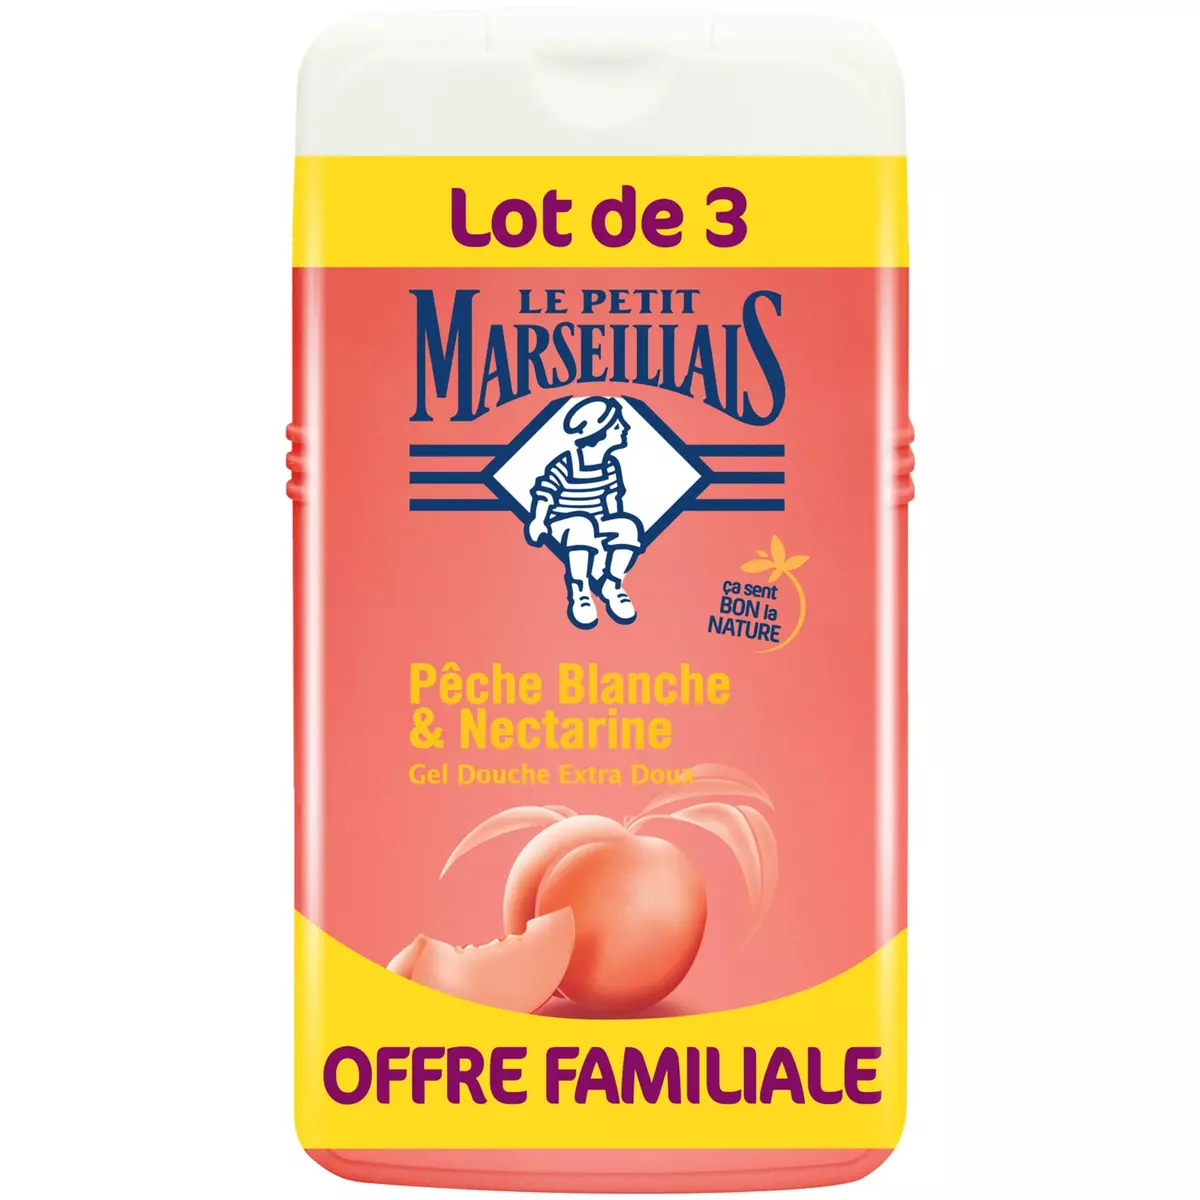 LE PETIT MARSEILLAIS Le Petit Marseillais Gel douche extra doux nectarine pêche blanche 3x250ml 3x250ml